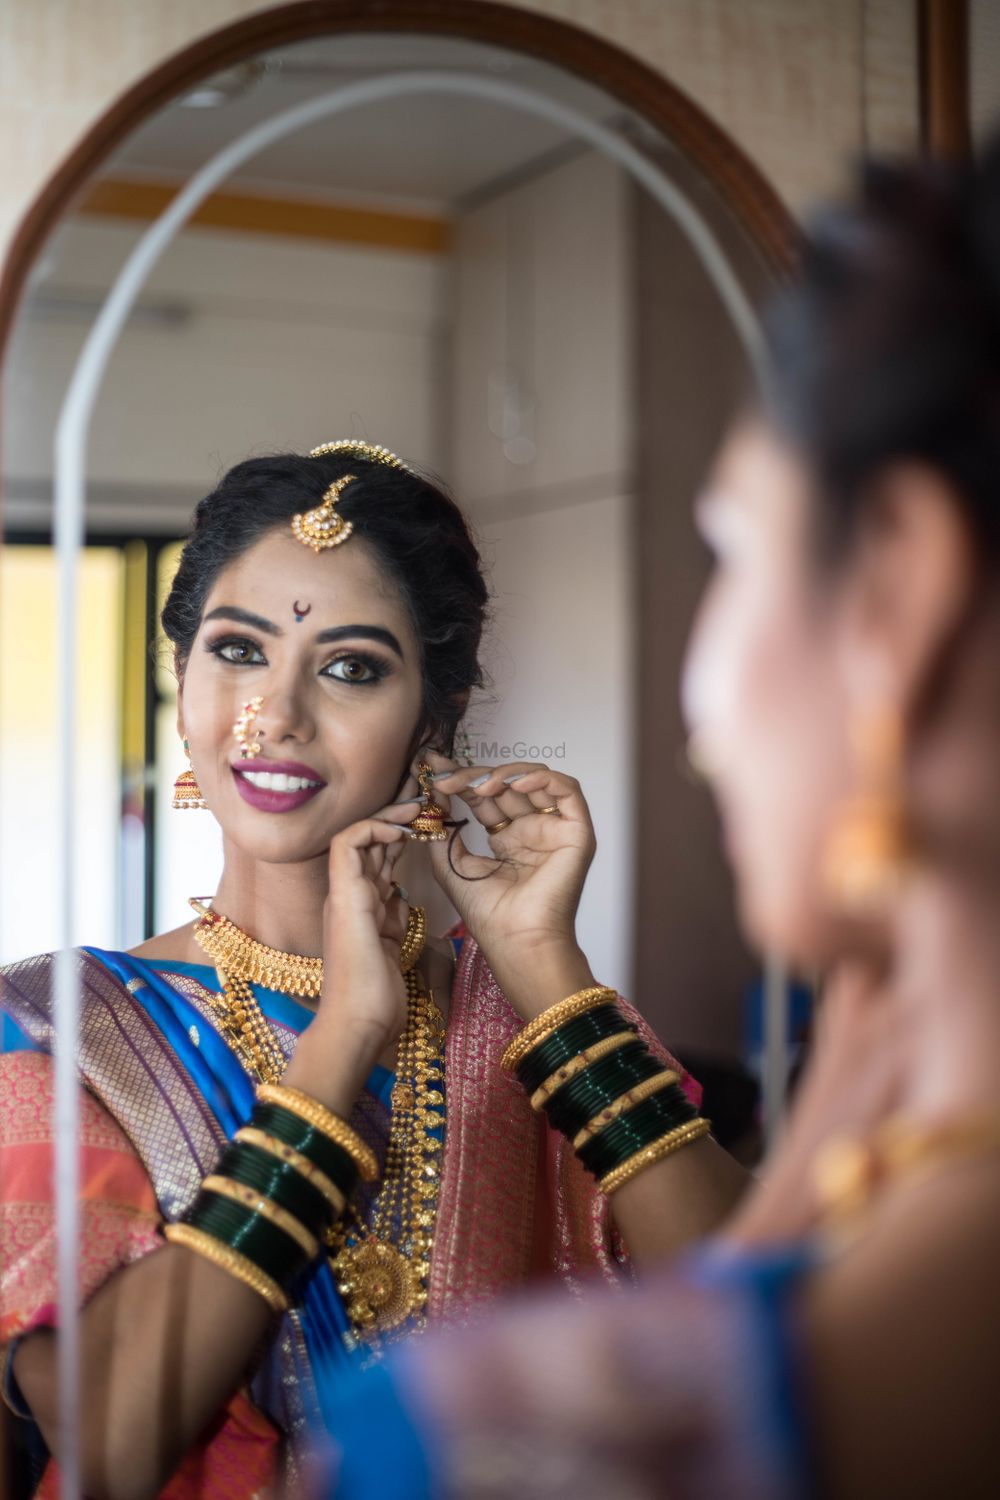 Photo By Chaitrali Makeup Artist - Bridal Makeup